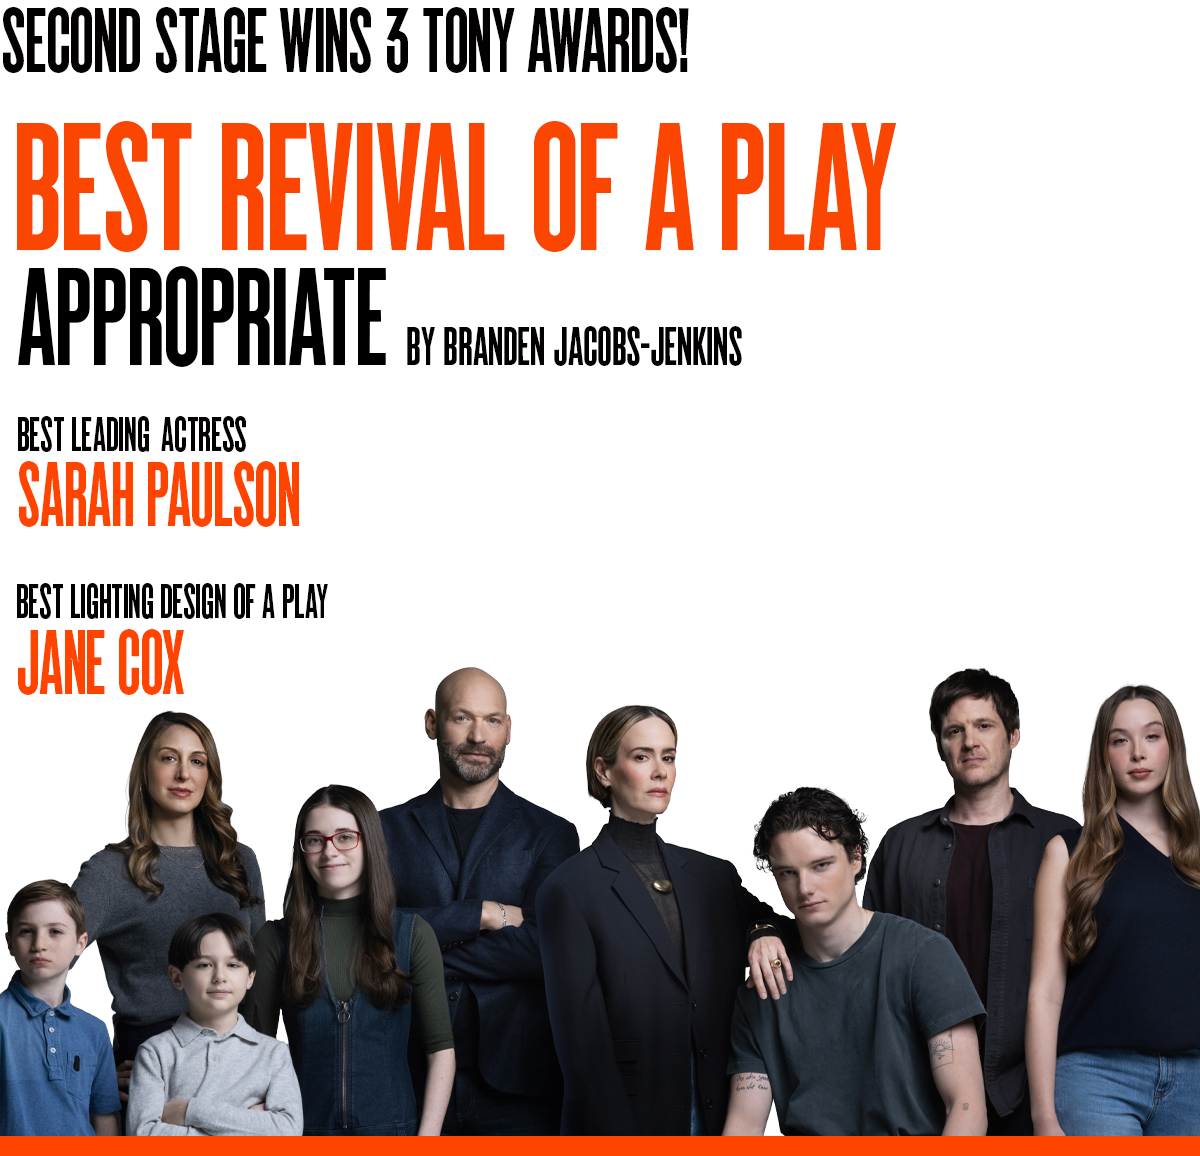 APPROPRIATE wins 3 Tony Awards!